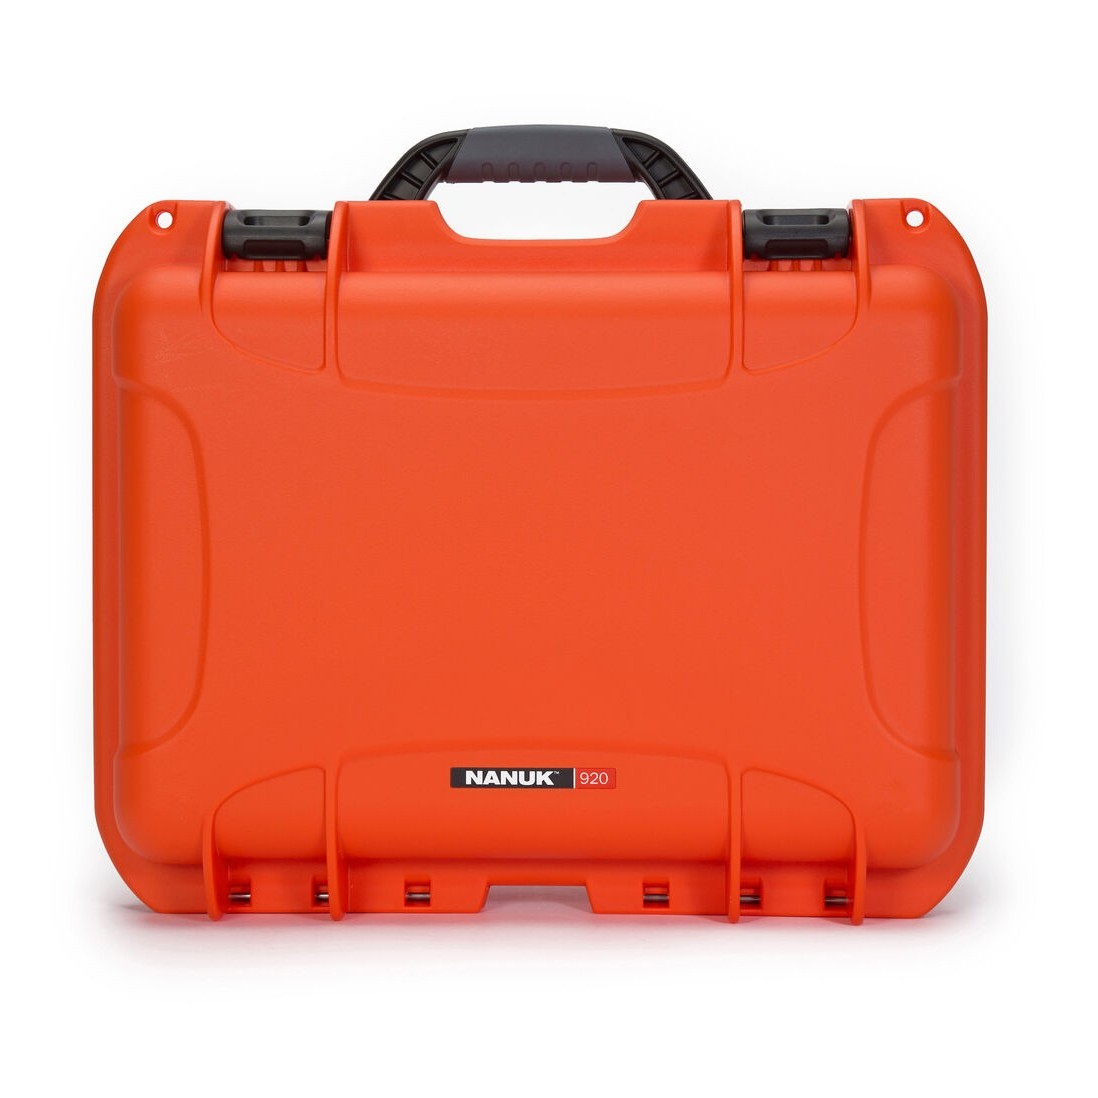 NANUK 920 Hard Utility Case With Lid Organizer & Padded Divider Orange